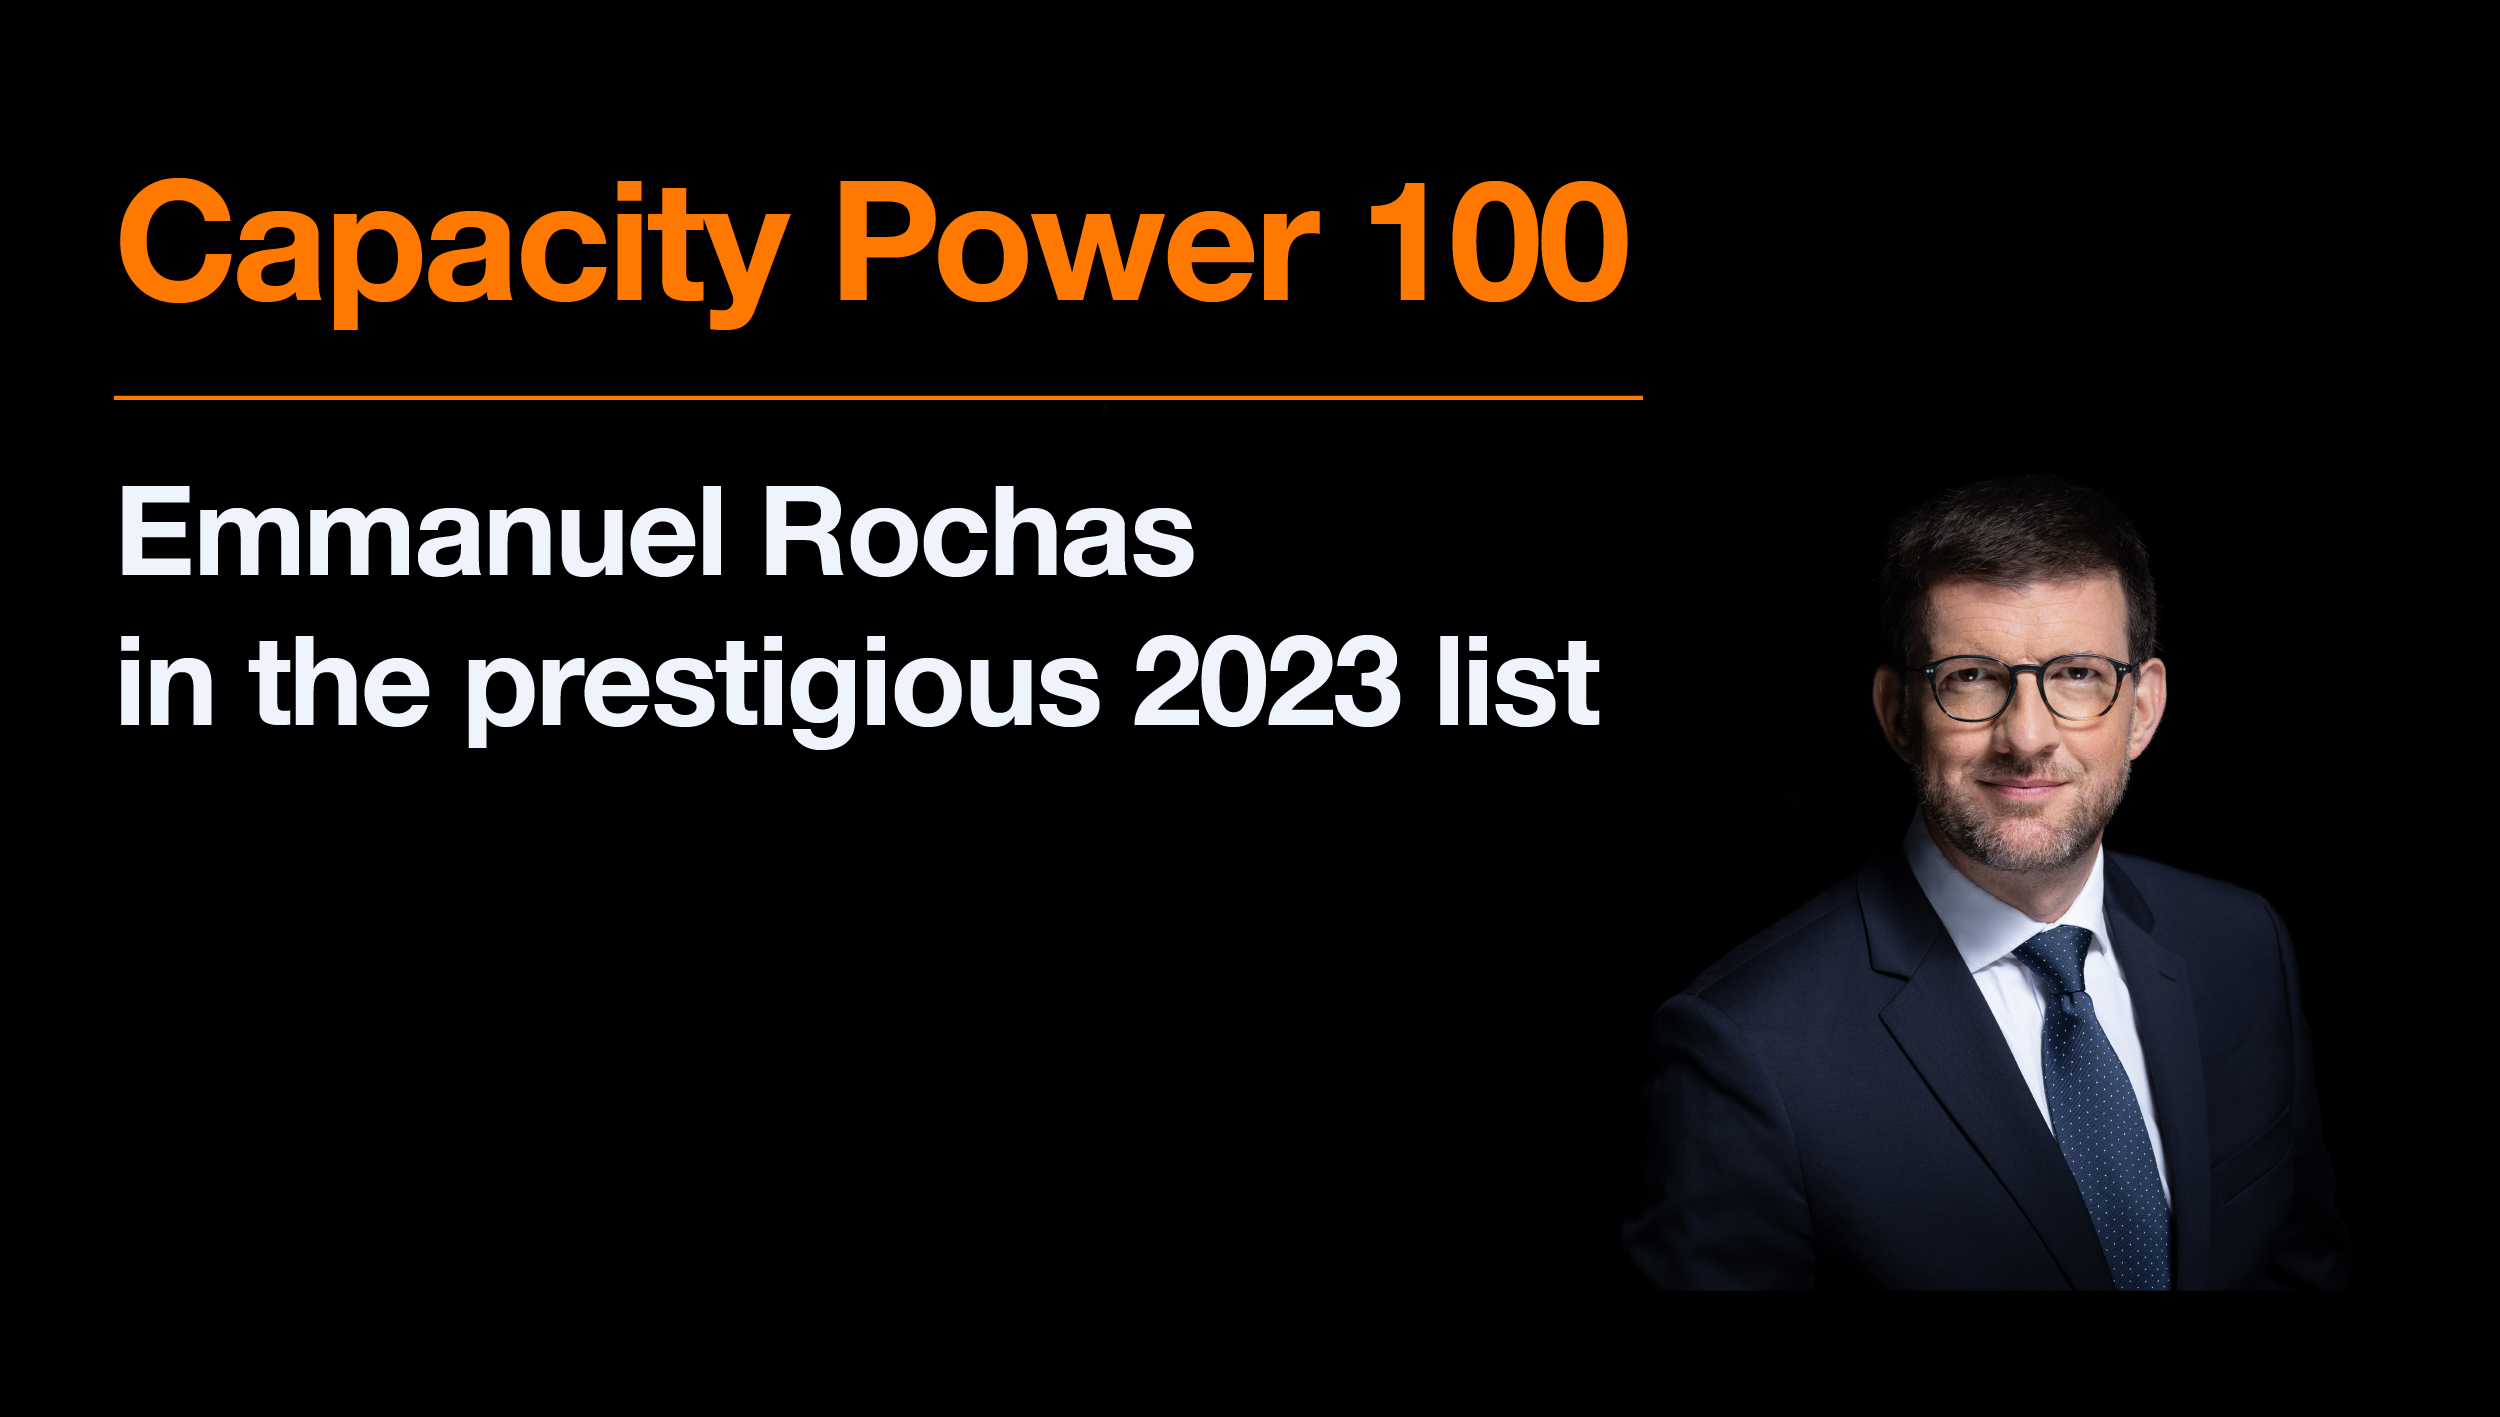 /wholesales_pages/uploads/1/img/Power100s-Emmanuel Rochas-2023_Vignette-social-media.png